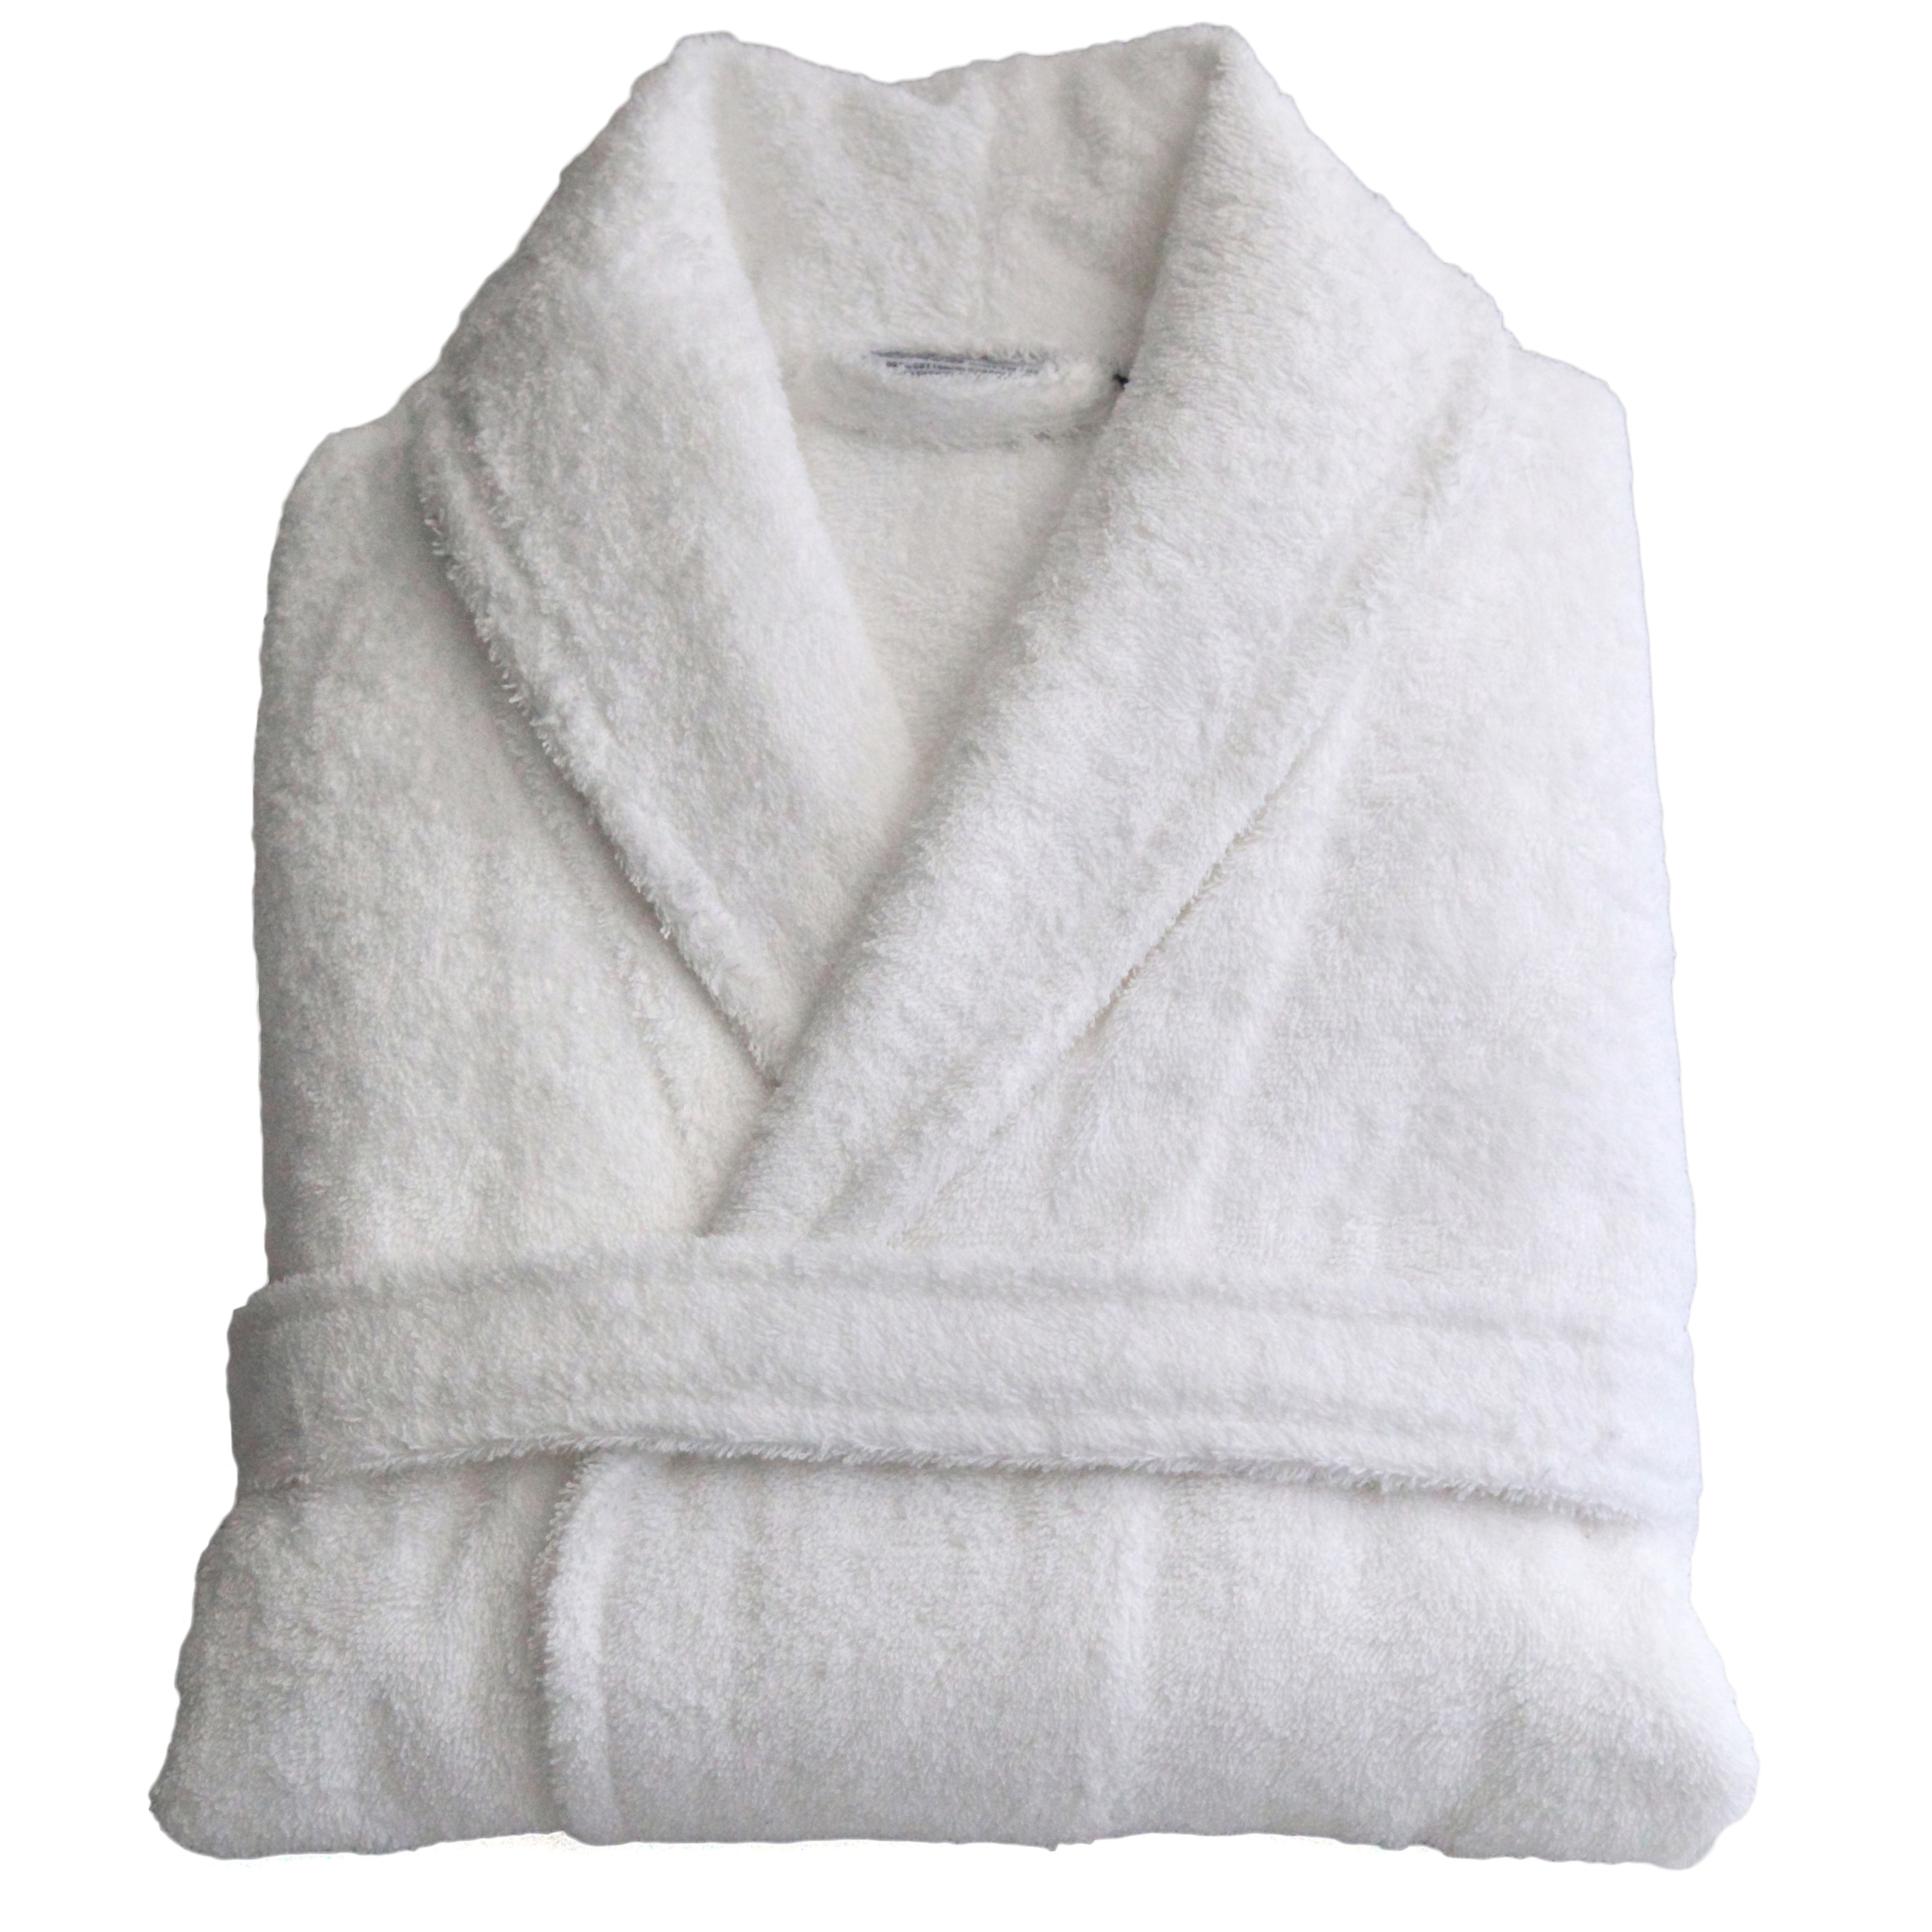 Authentic Hotel Spa Unisex White Turkish Cotton Terry Cloth Bath Robe Ae8ce1fe 983c 42a6 84b4 Bebc60e2994c 